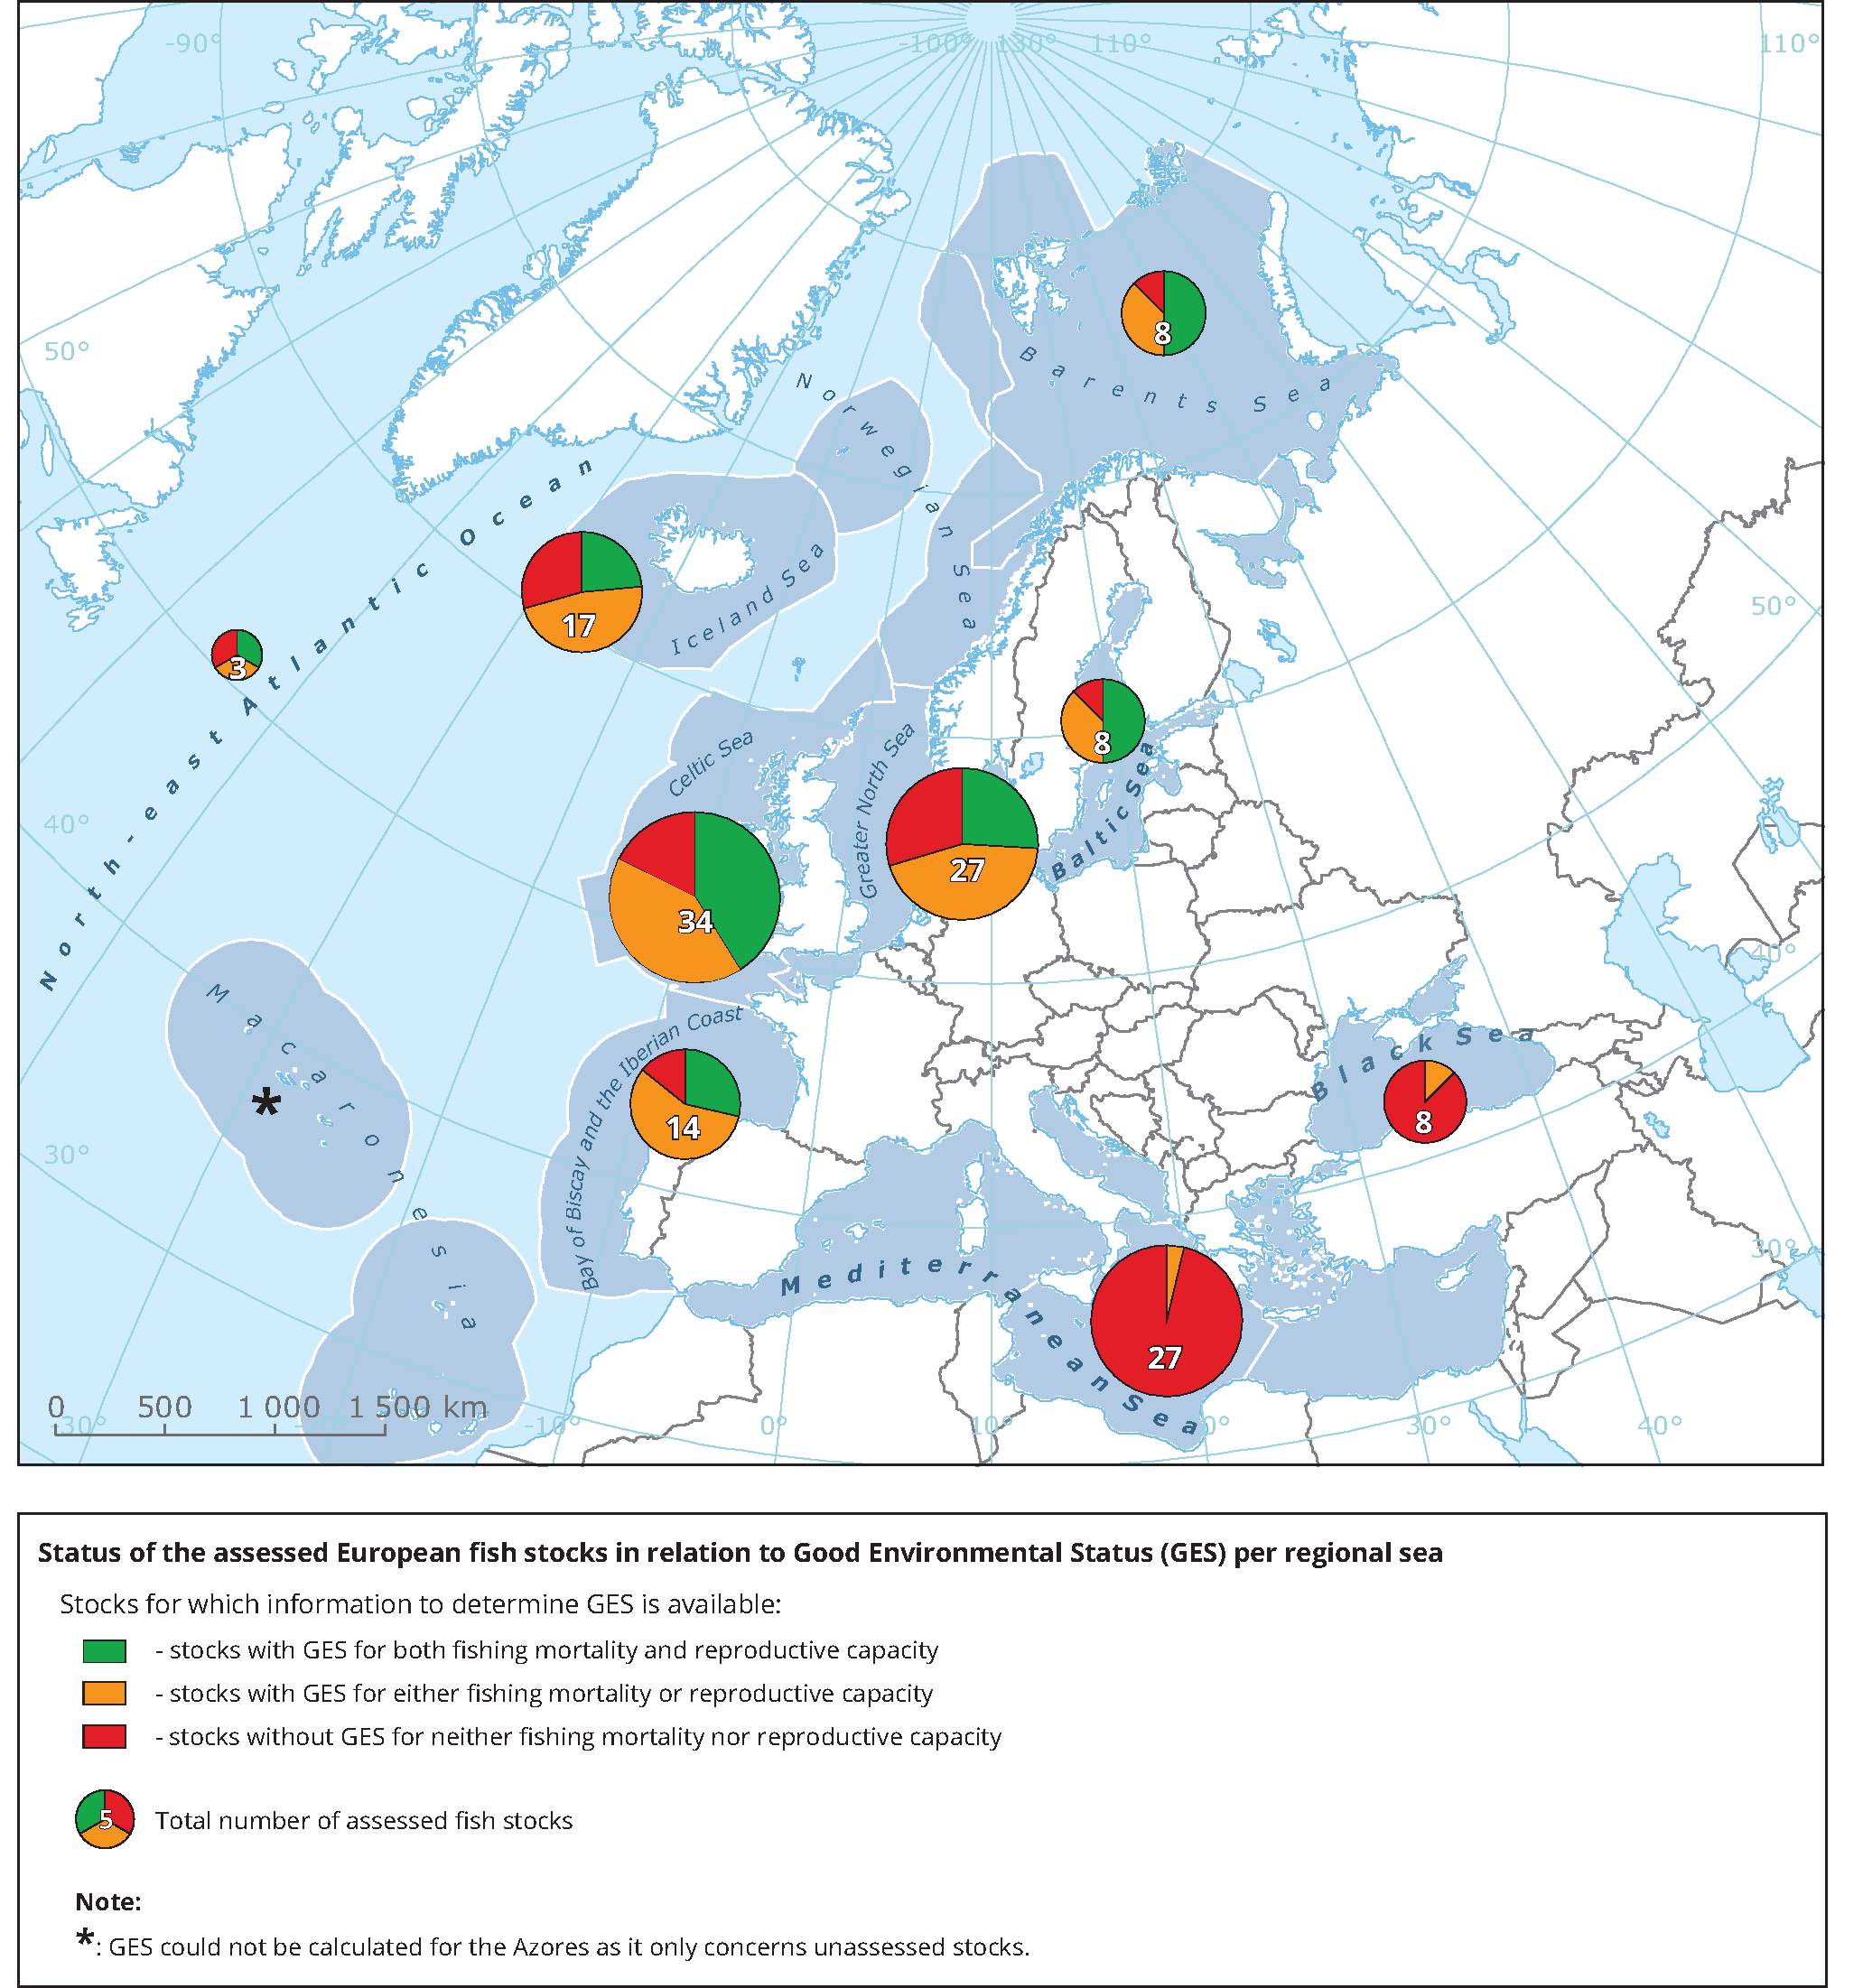 Status of the assessed European fish stocks in relation to Good Environmental Status per regional sea